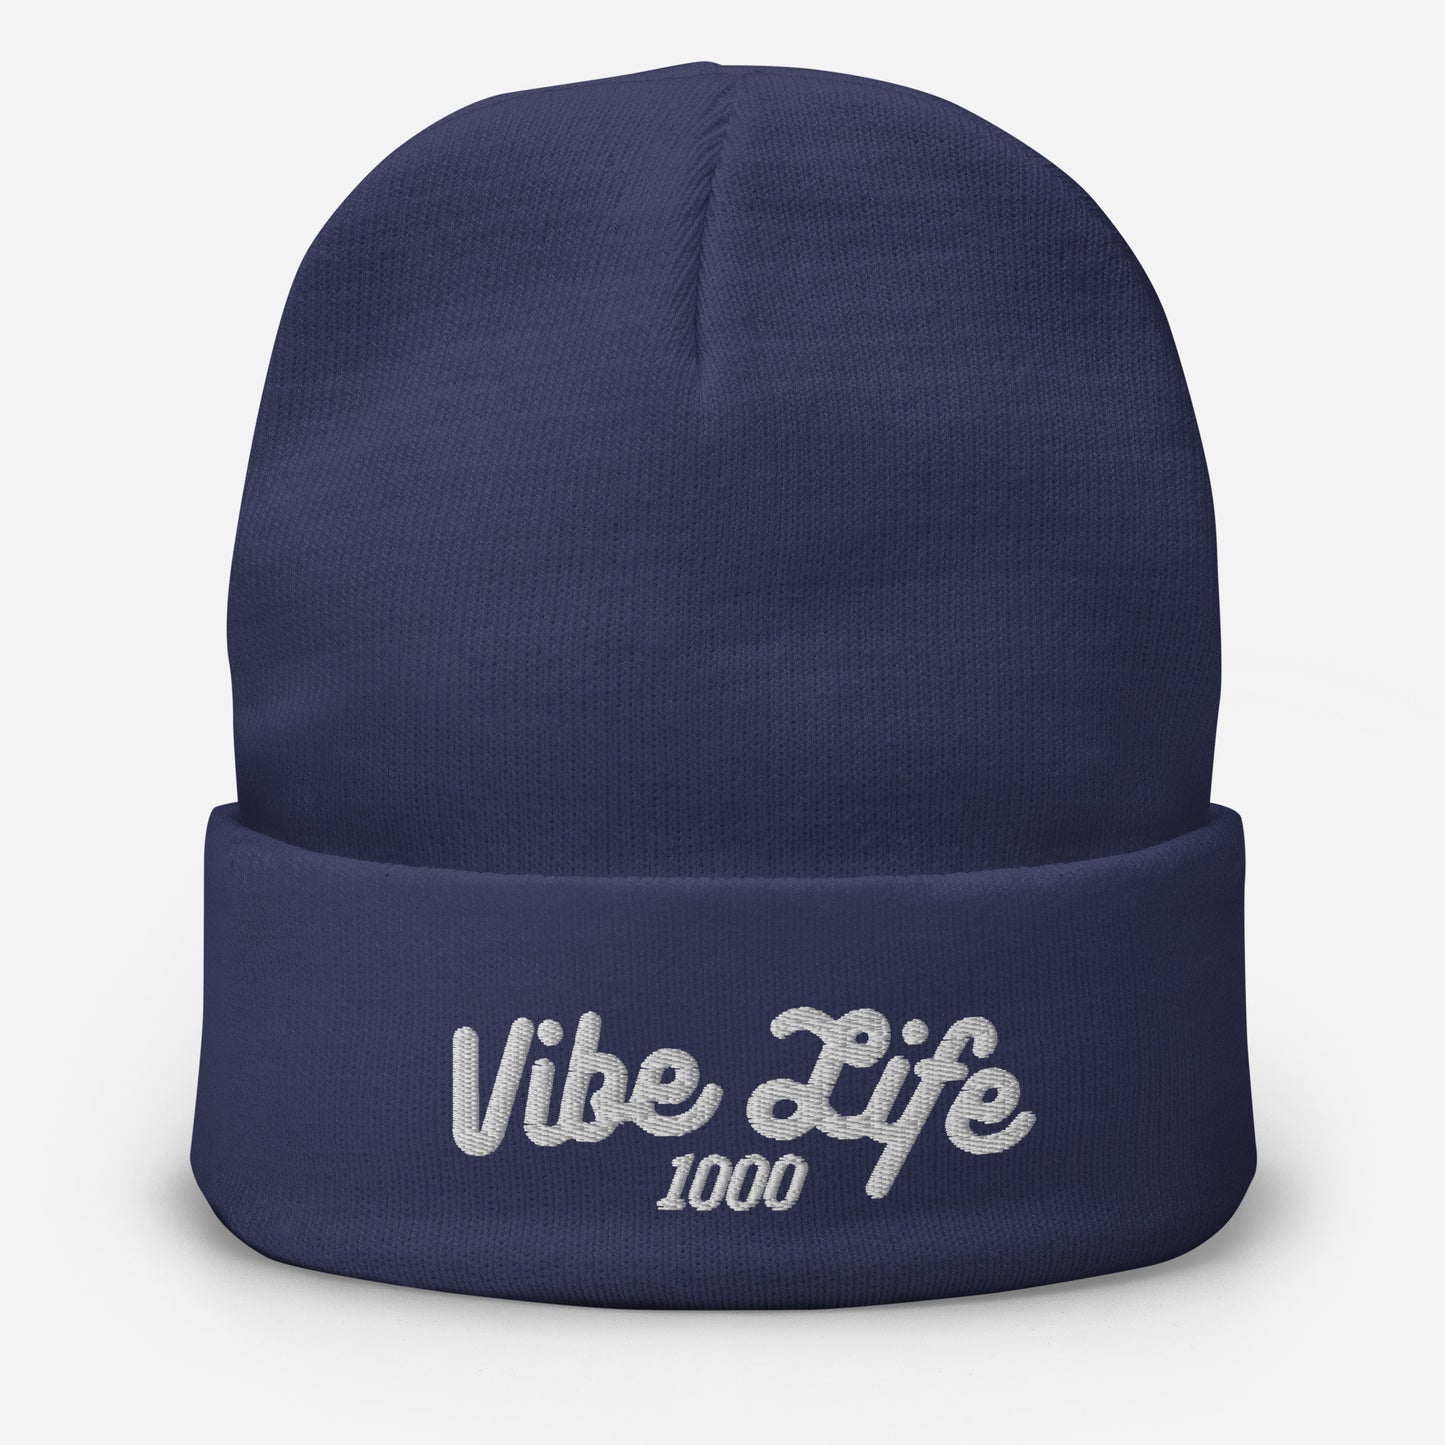 Vibe Life 1000 - Beanie